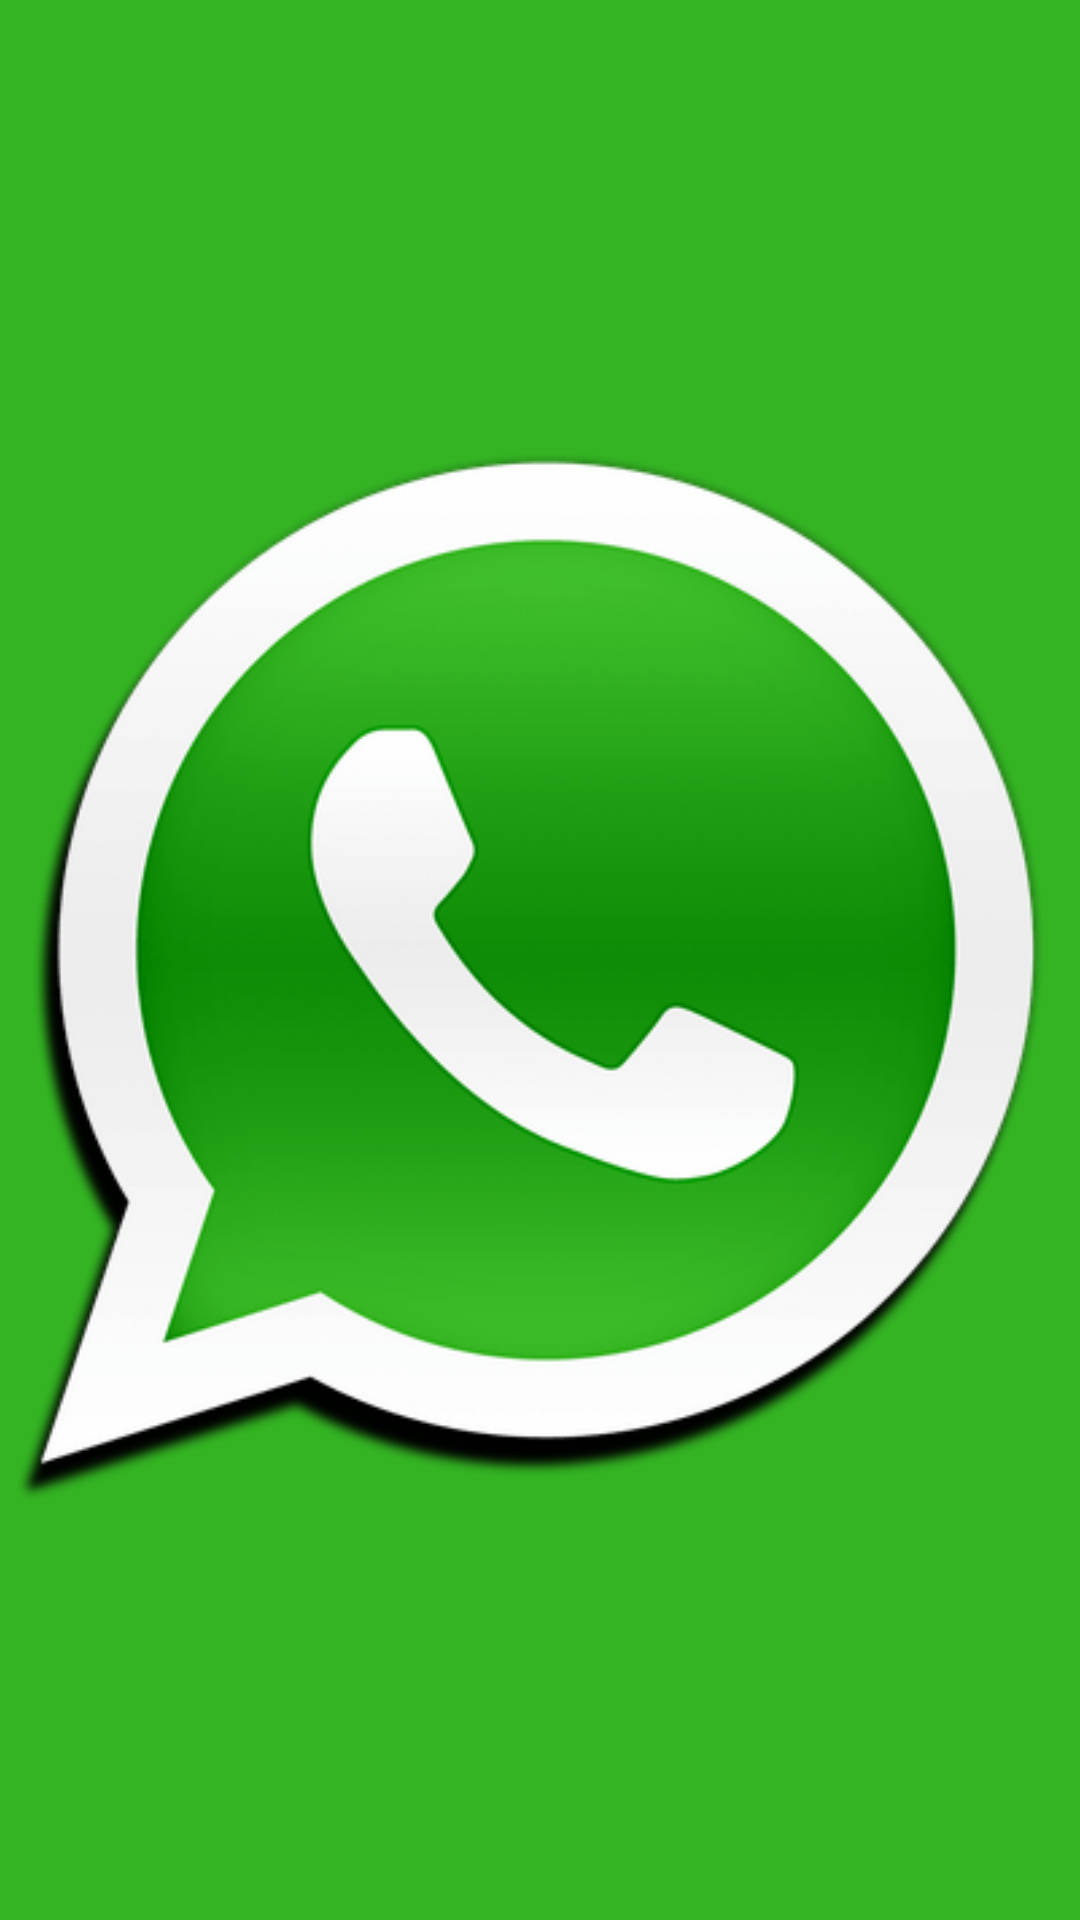 The World's Most Popular Messaging Platform – Whatsapp Background